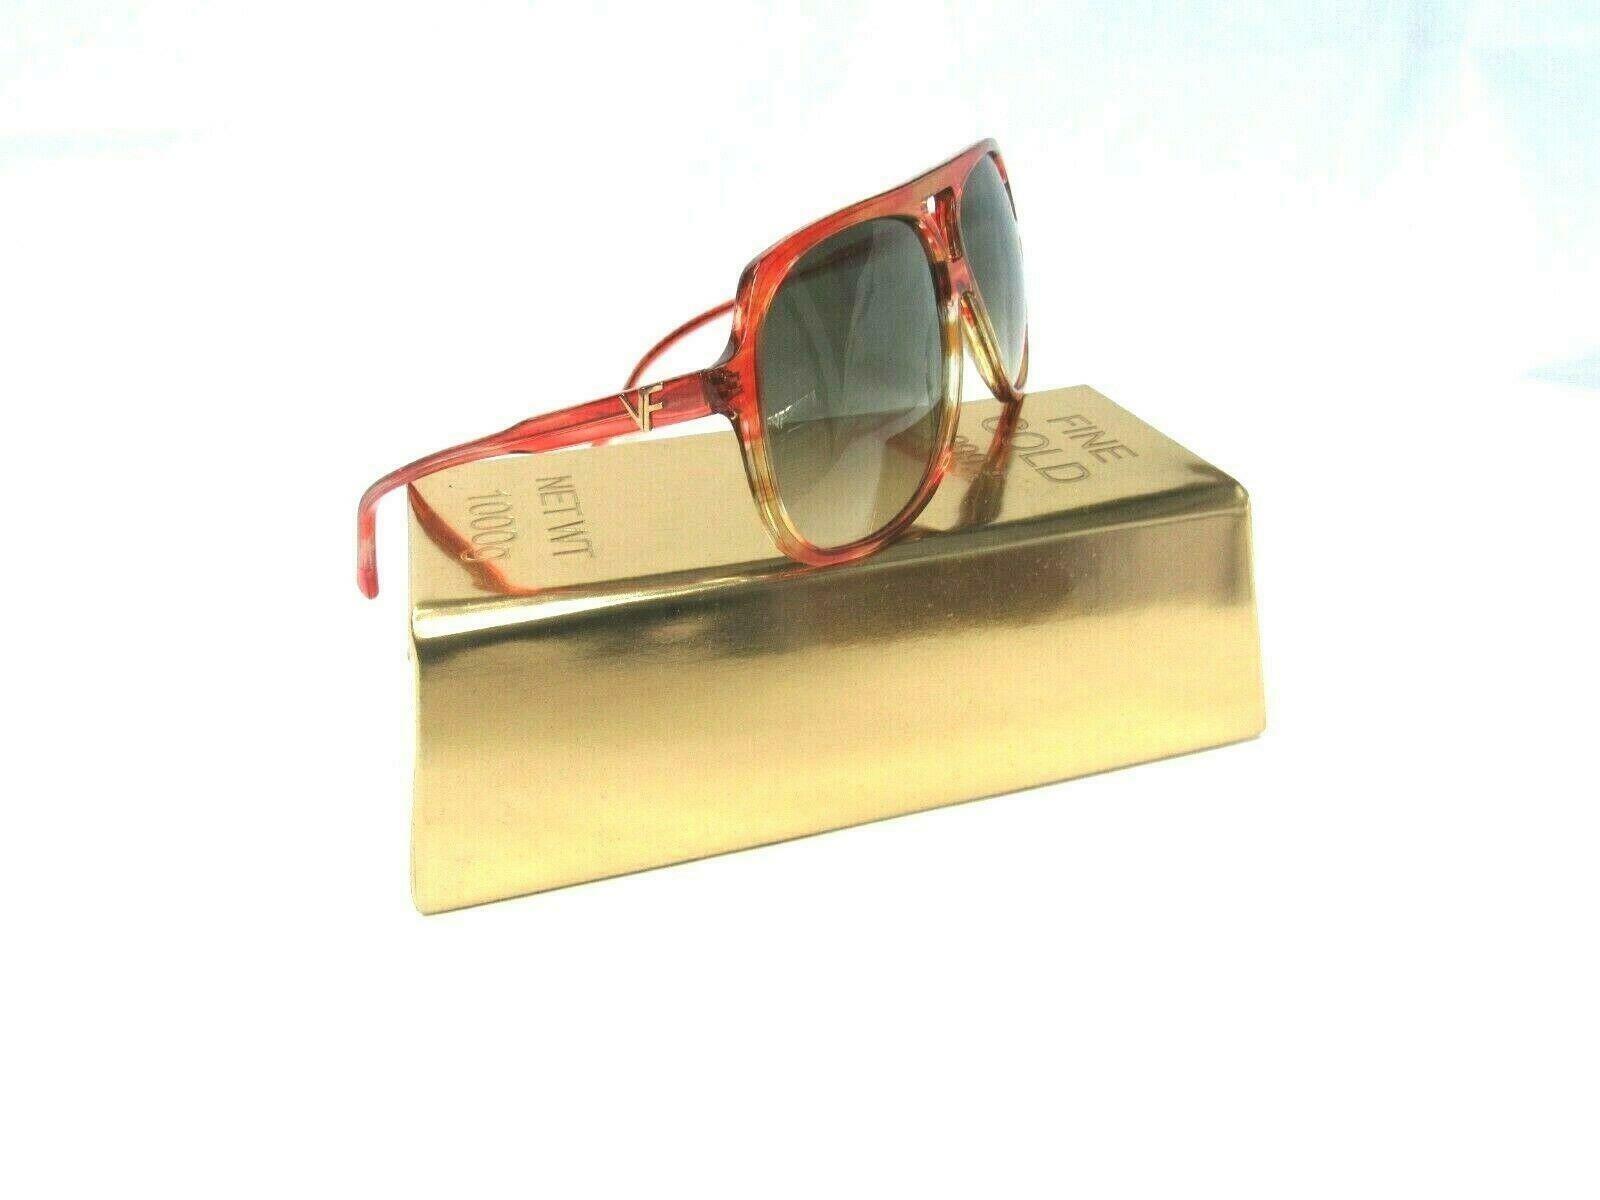 Vintage Frames By Corey Shapiro Women's Fashion Sunglasses Cherry Red - image 3 of 6